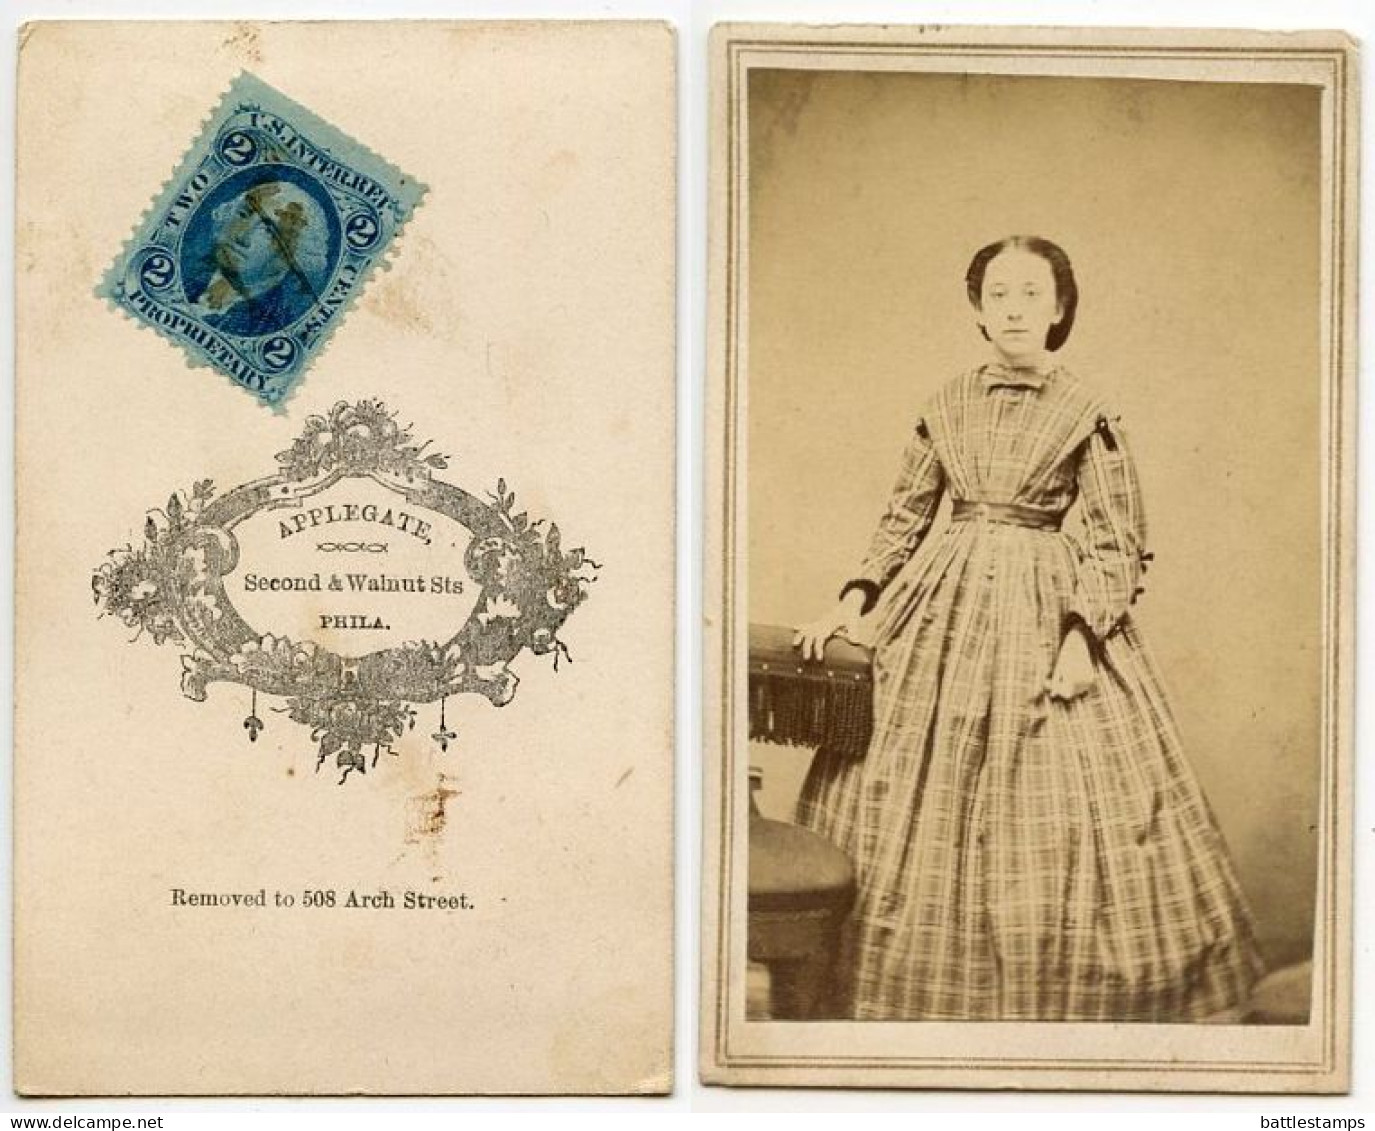 United States 1860‘s Photograph, Woman - Applegate, Philadelphia Pennsylvania - Scott R13c Revenue Stamp - Steuermarken